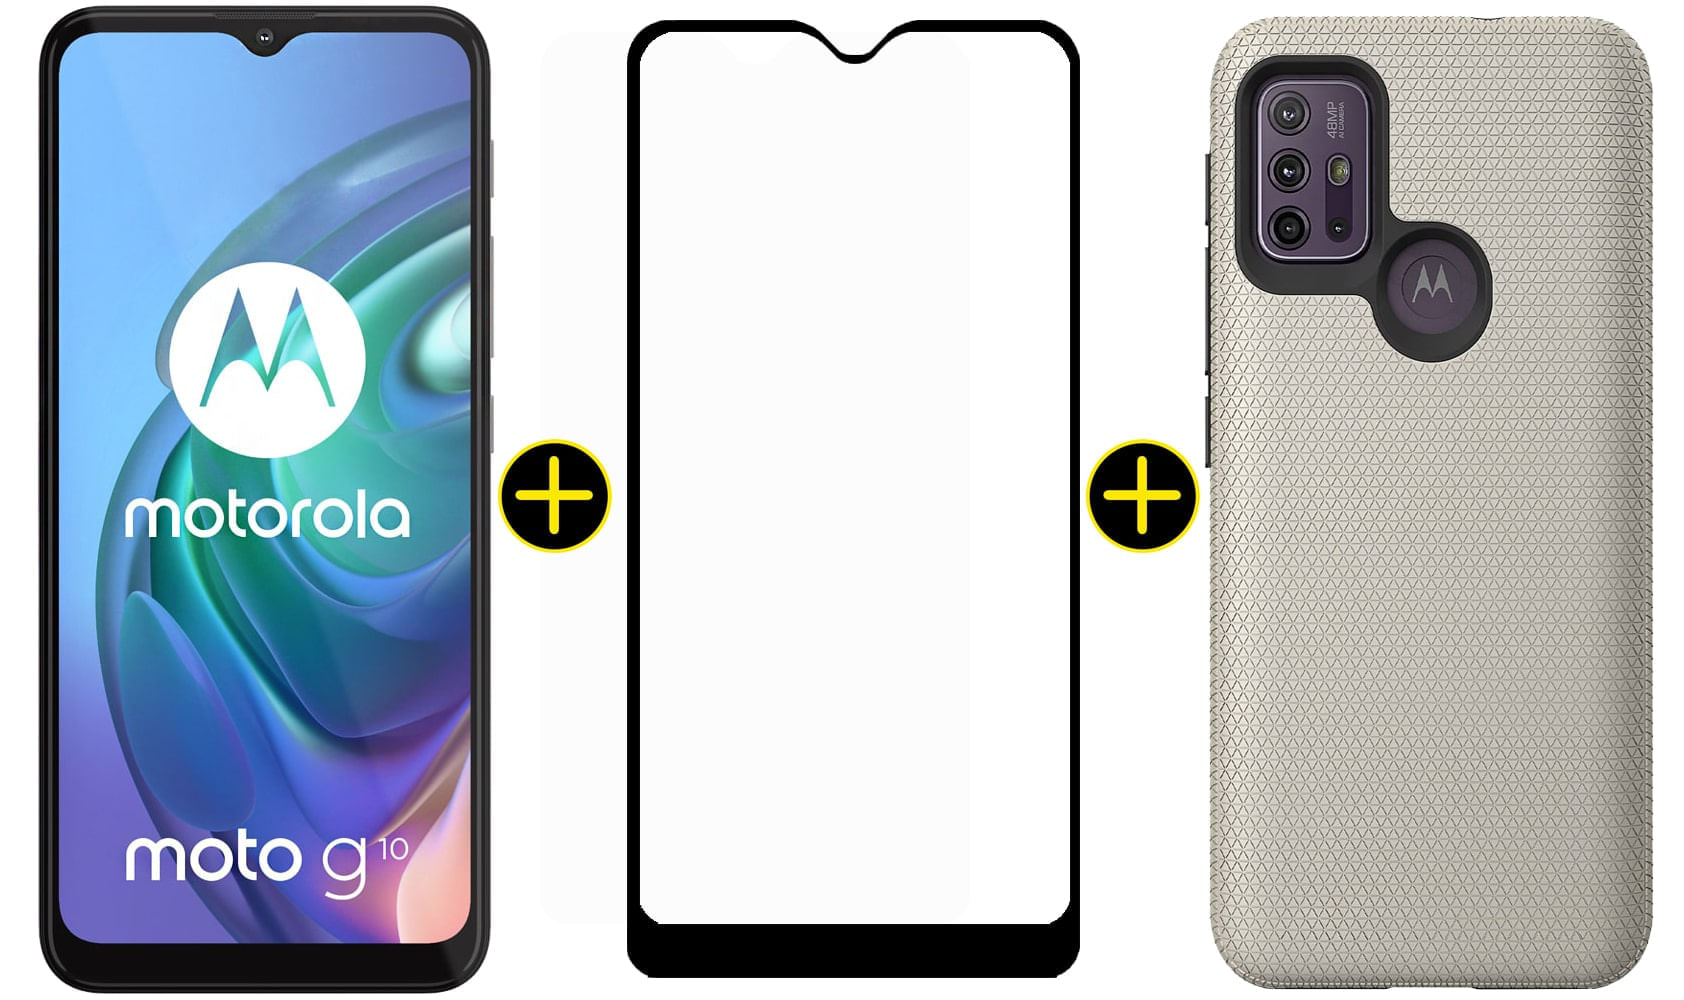 Kit Celular Motorola Moto G10 Branco Floral 64GB + Capa Protetora Triangle Dourado + Película Protetora